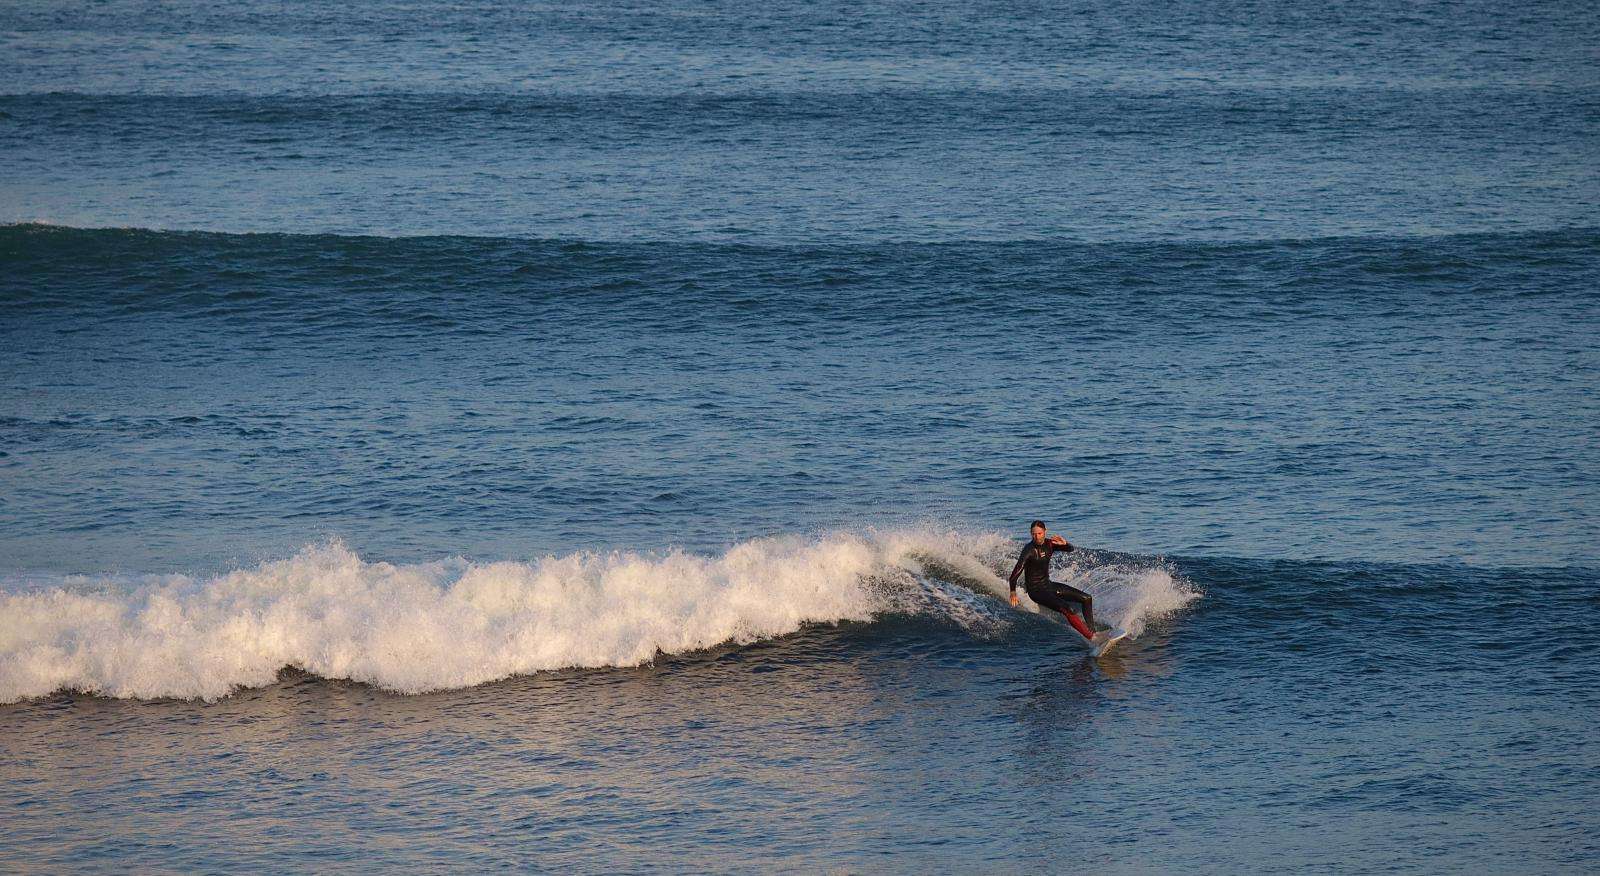 Phillip Island Surfer - Don Stott